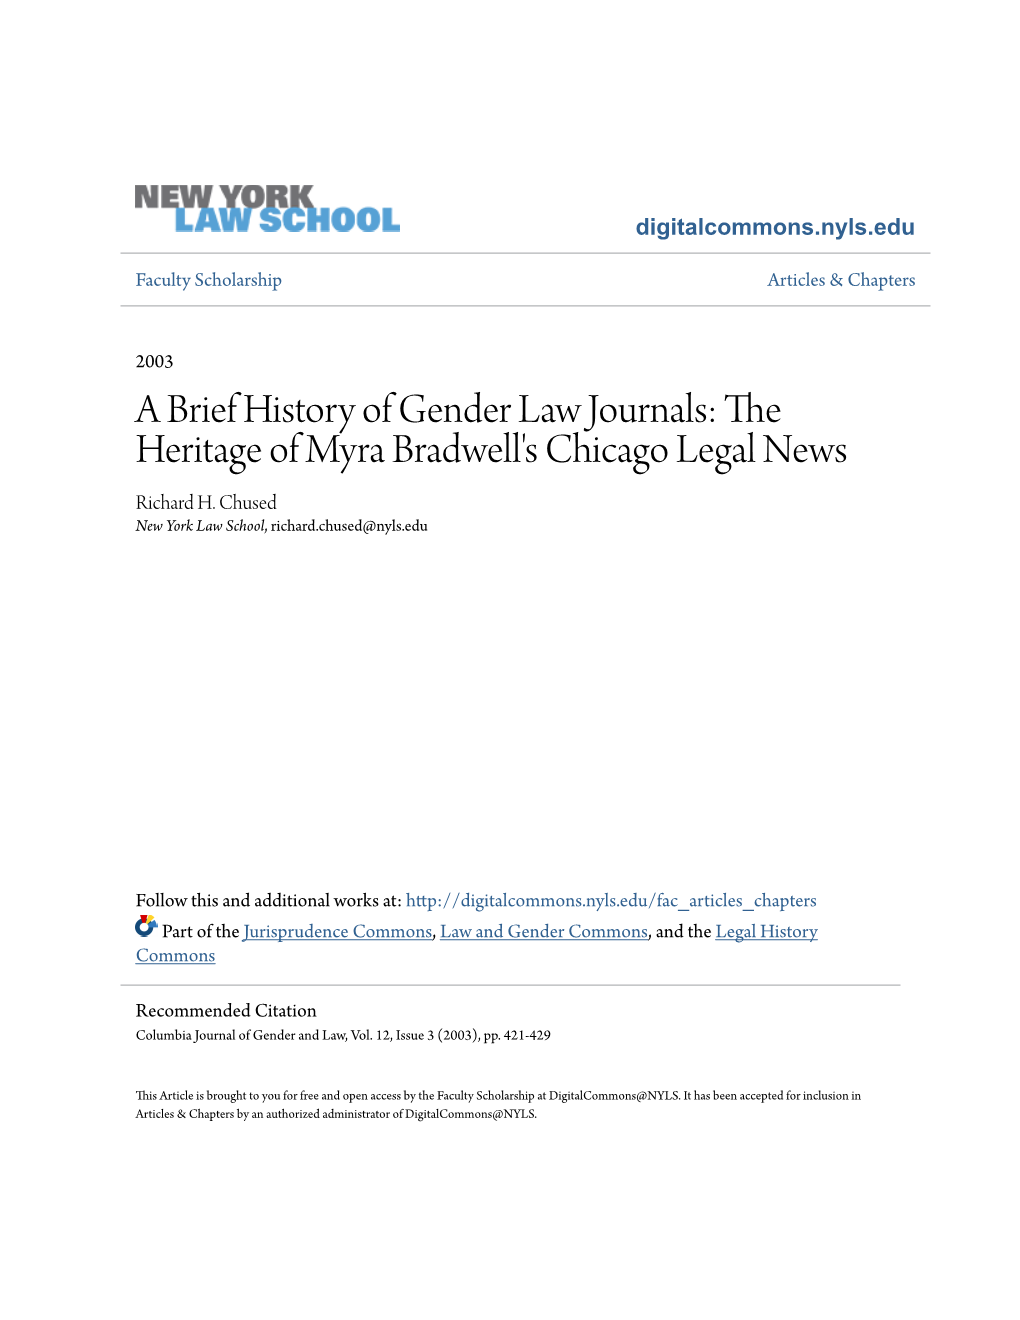 The Heritage of Myra Bradwell's Chicago Legal News Richard H